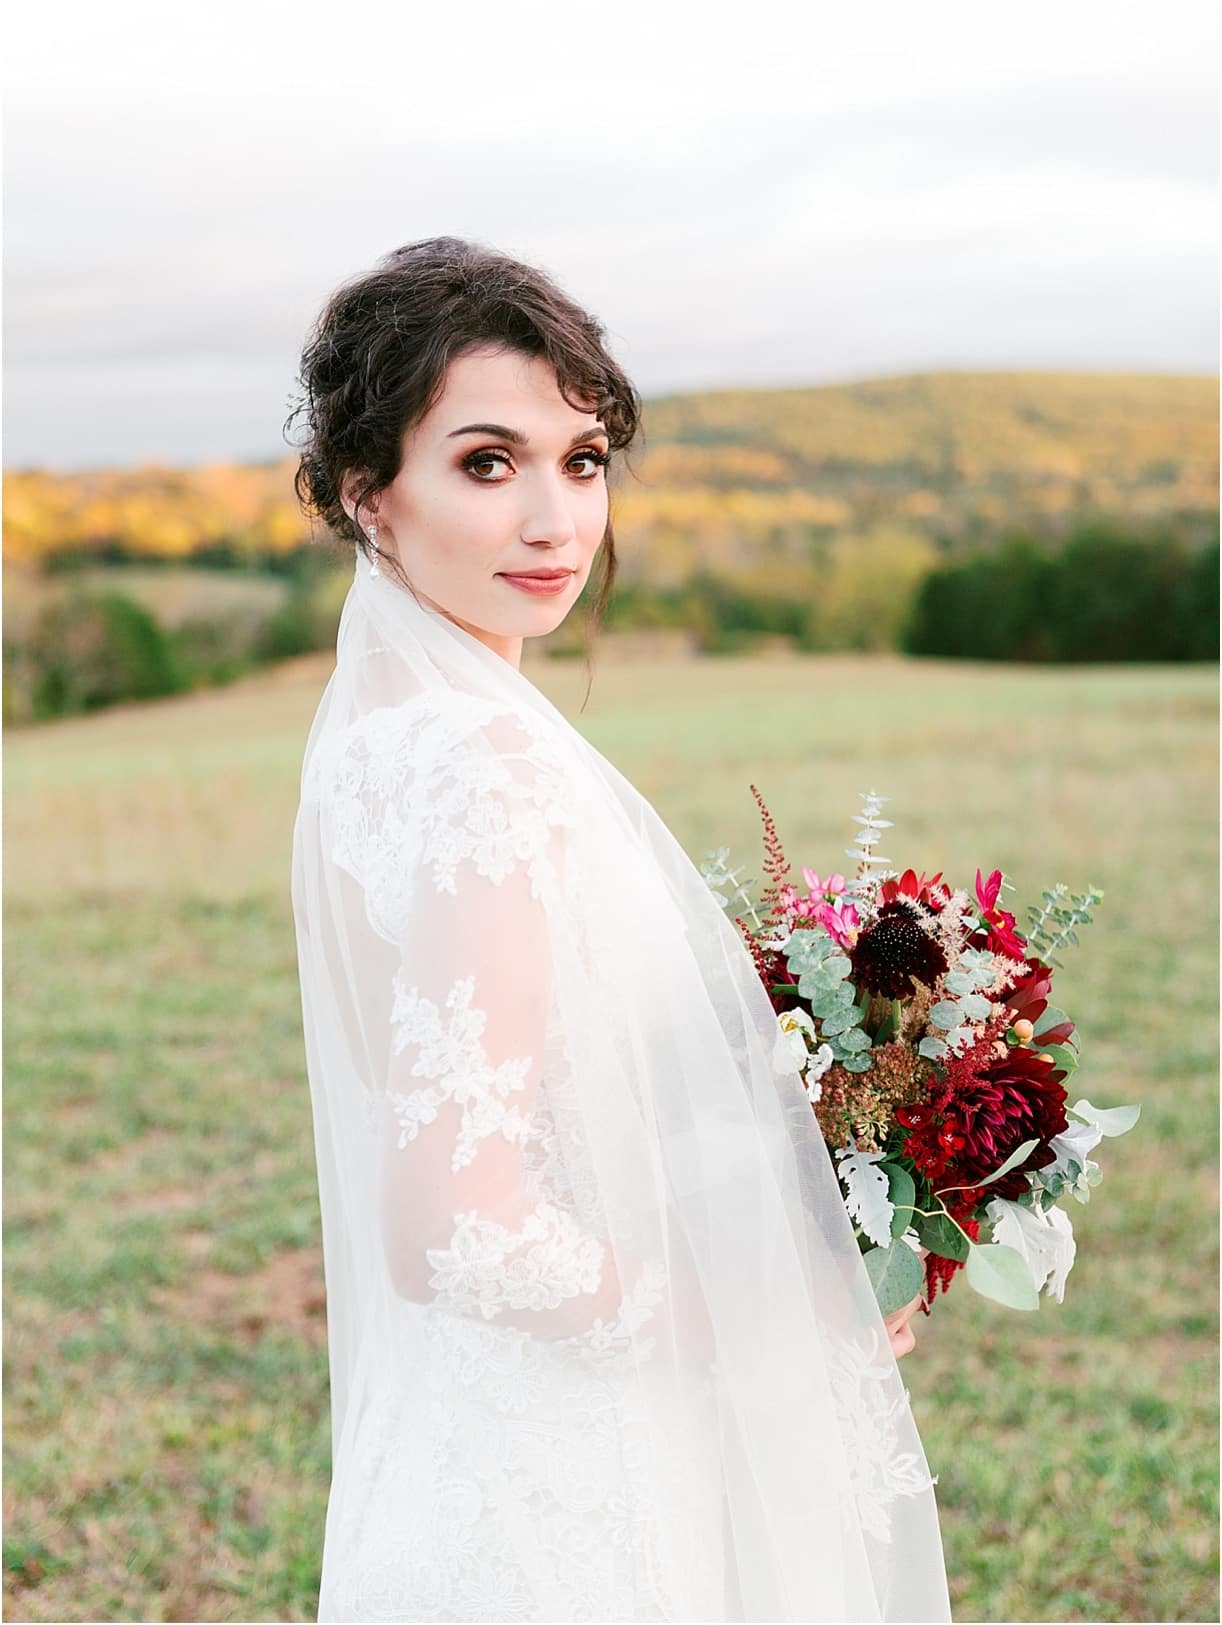 Dusty Blue Wedding Color Palette | Hill City Bride Virginia Weddings Wedding Blog | Something Blue Bridal Portrait